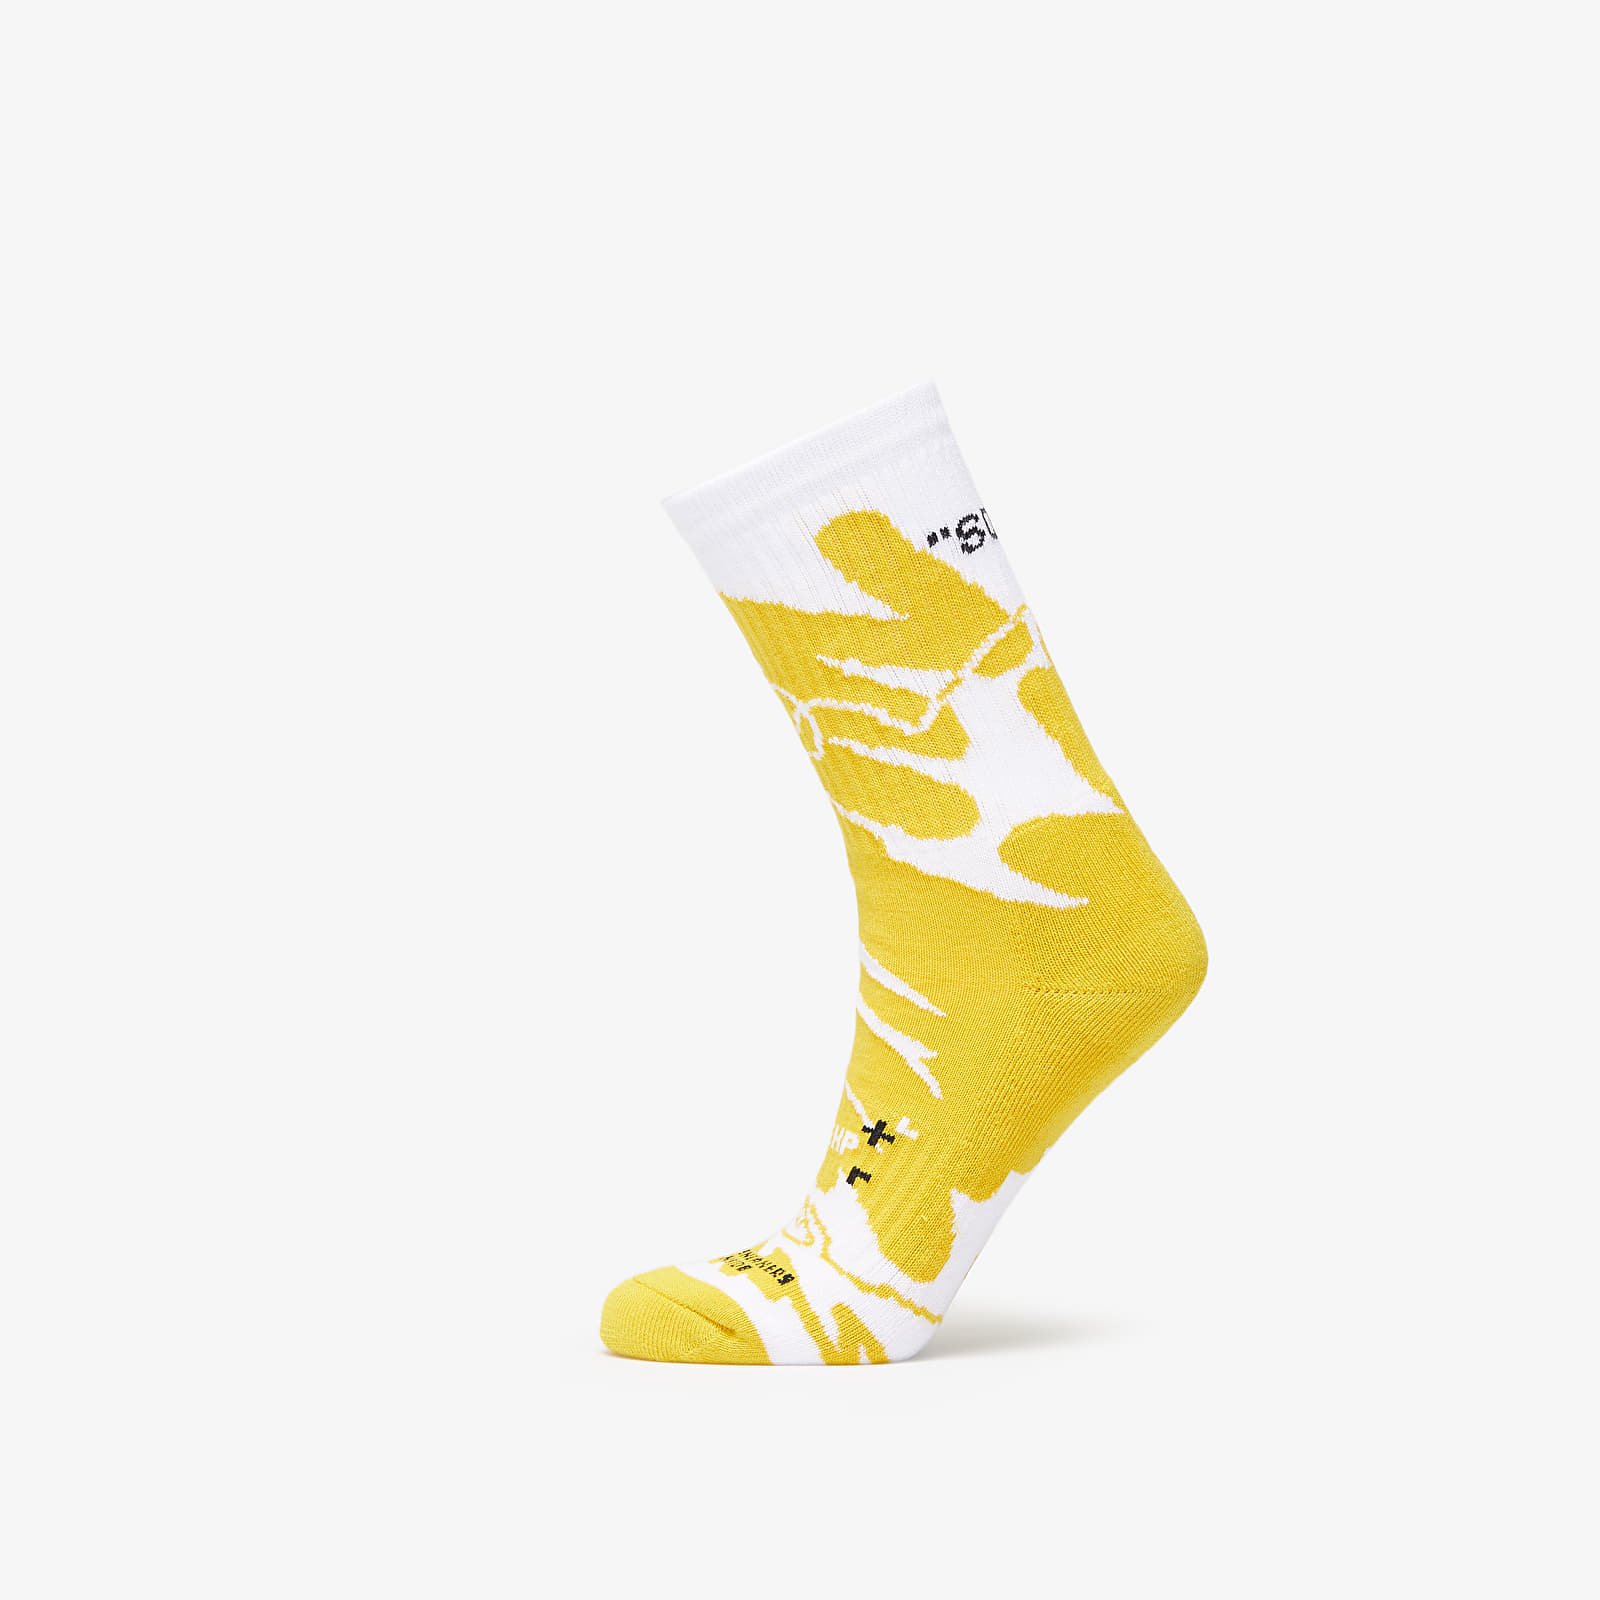 Zoknik Footshop The "Basketball" Socks White/ Yellow